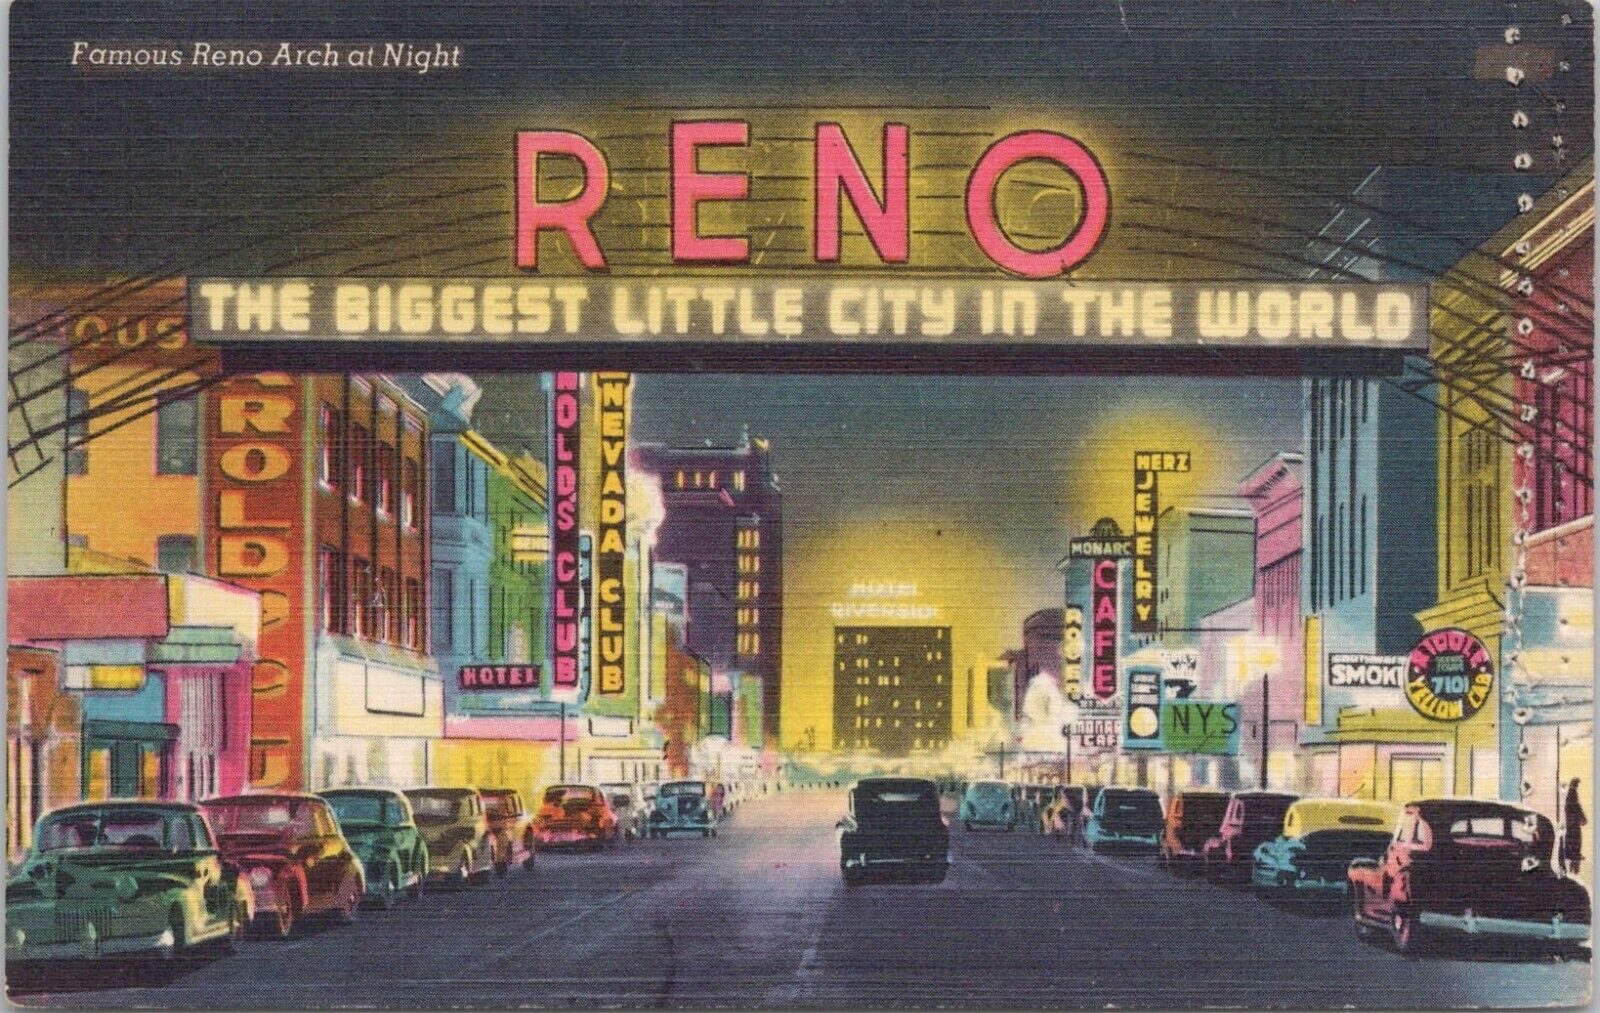 Linen PC Reno Nevada Famous Reno Arch at Night Casinos 1950s era